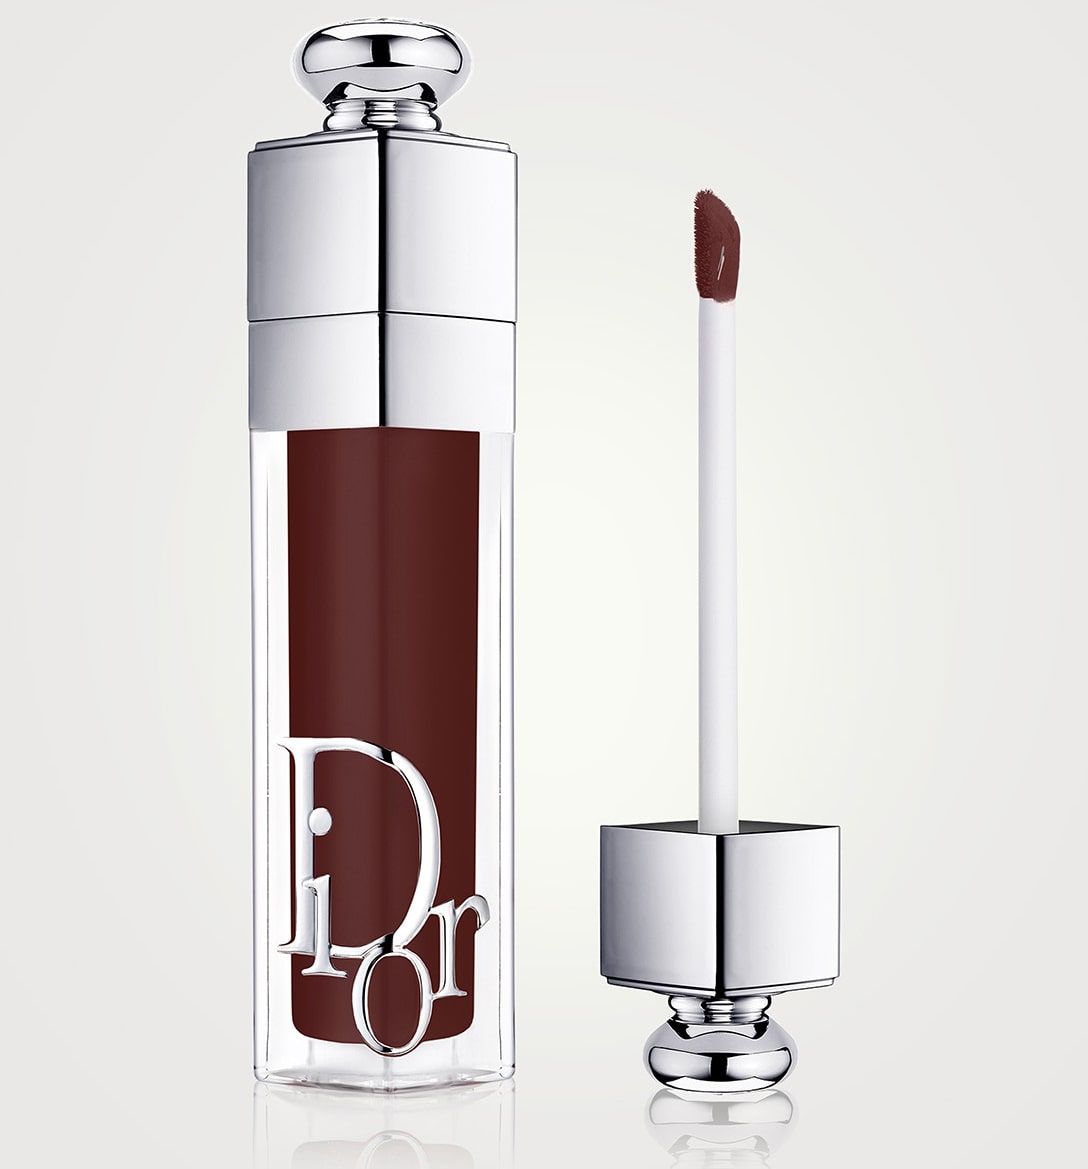 Son dưỡng Dior Addict Lip Maximizer FullsizeMinisize nobox 01041220   Trang điểm môi  TheFaceHoliccom